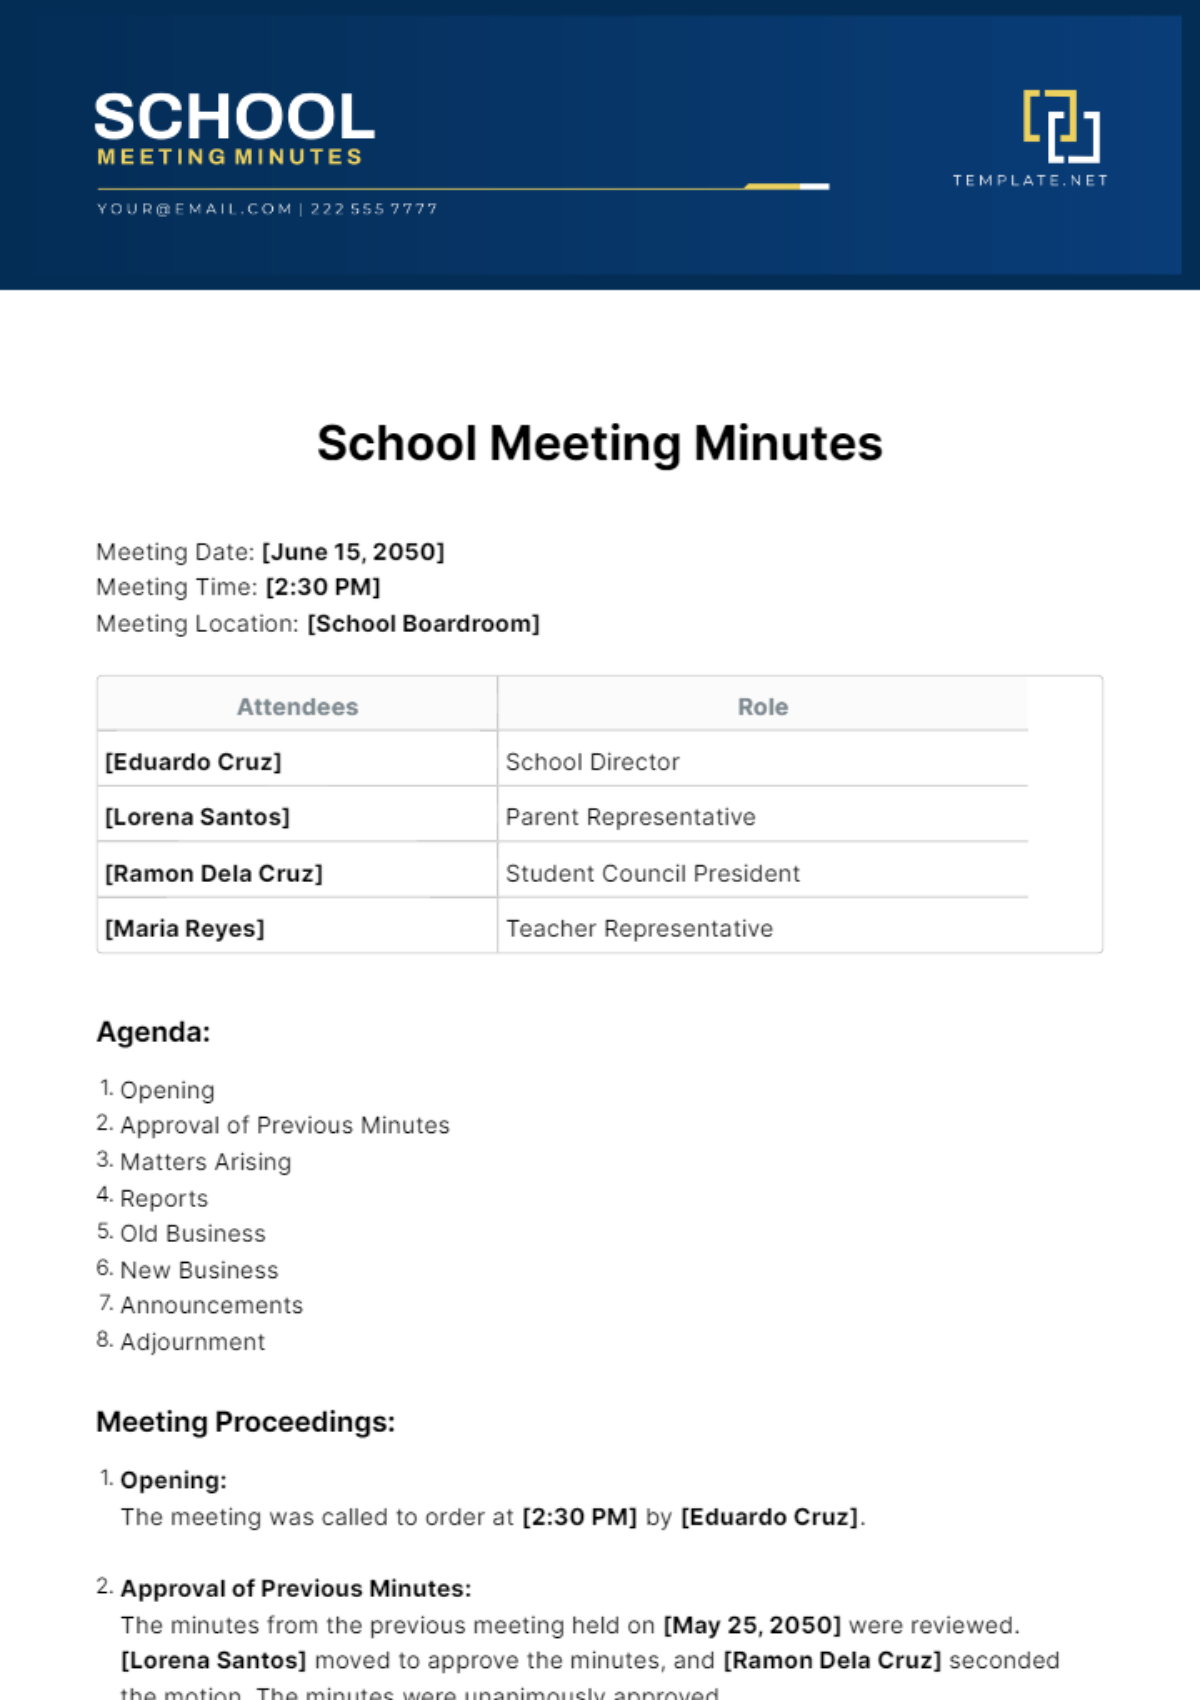 School Meeting Minutes Template